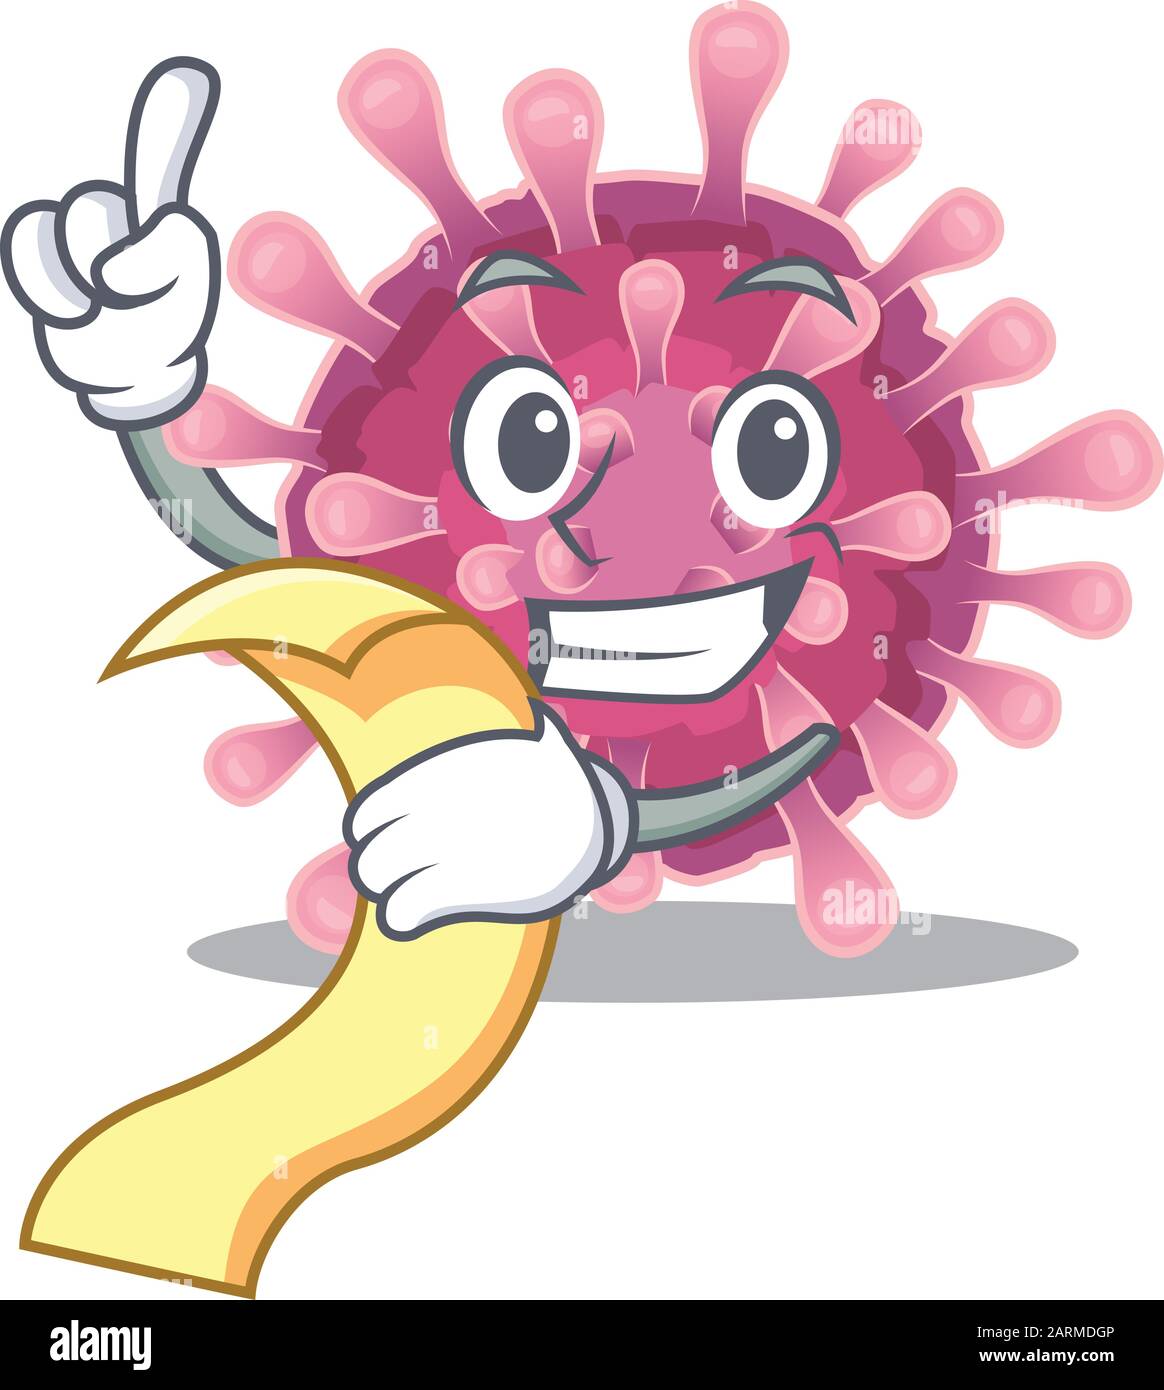 A Funny Cartoon Character Of Corona Virus With A Menu Stock Vector